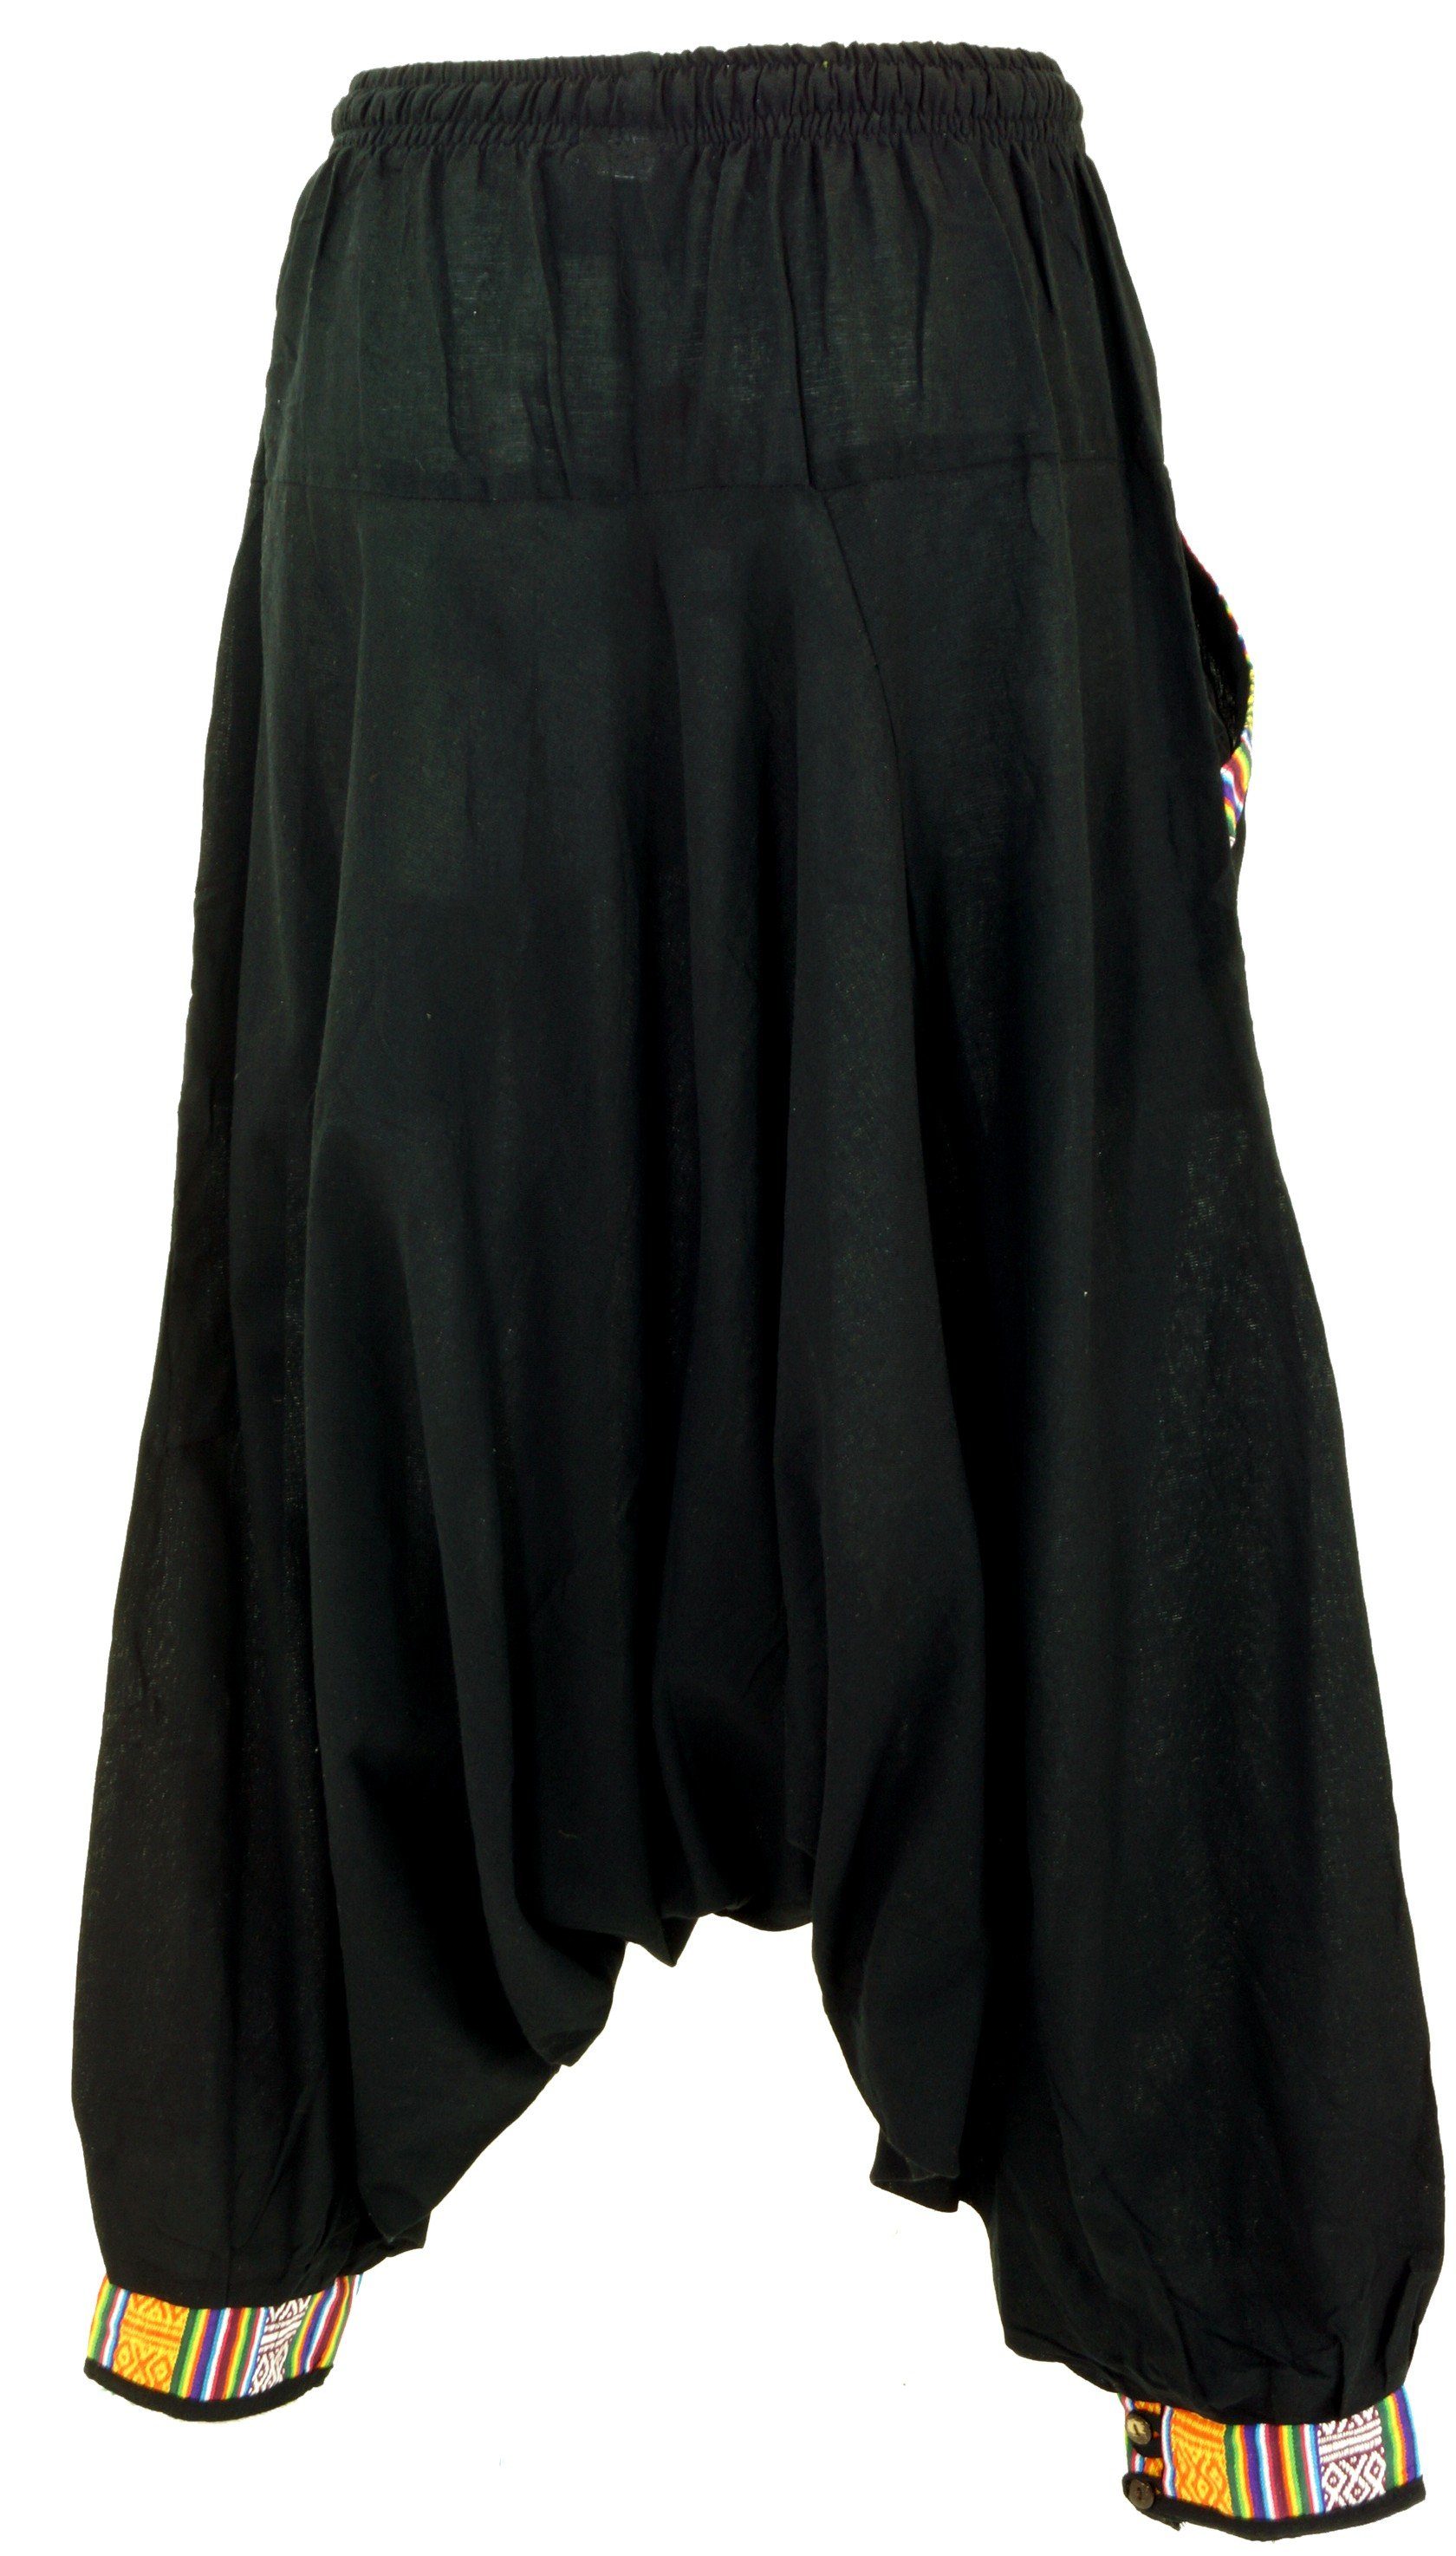 Guru-Shop Relaxhose Pluderhose, Nepali Aladinhose schwarz - Bekleidung alternative Style, Ethno